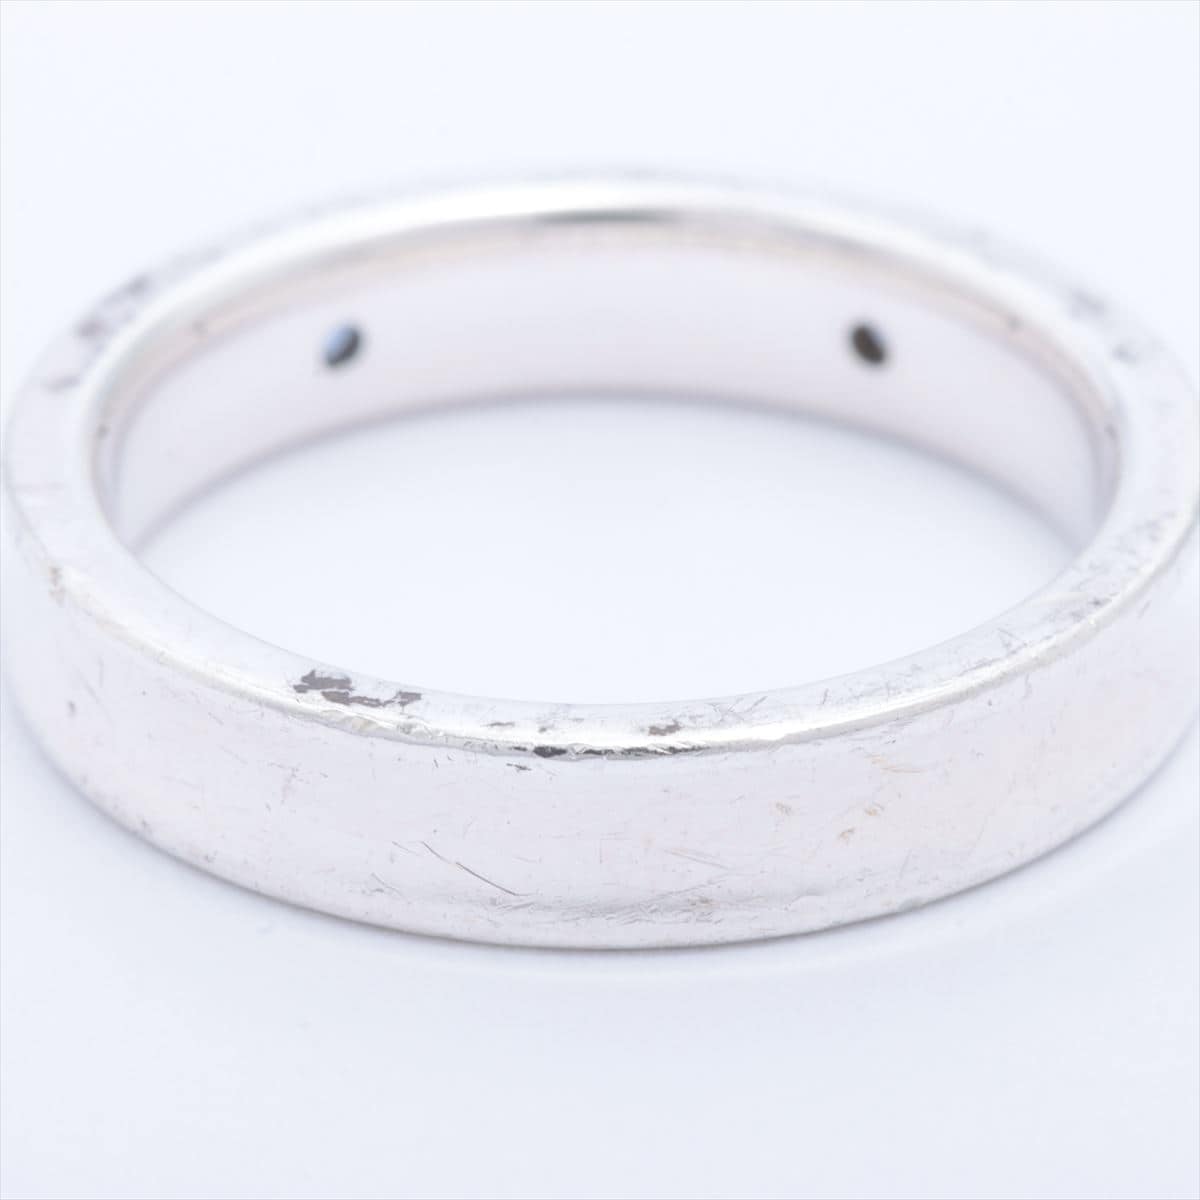 Tiffany 1837 Narrow rings 925 3.6g Silver sapphire 2P